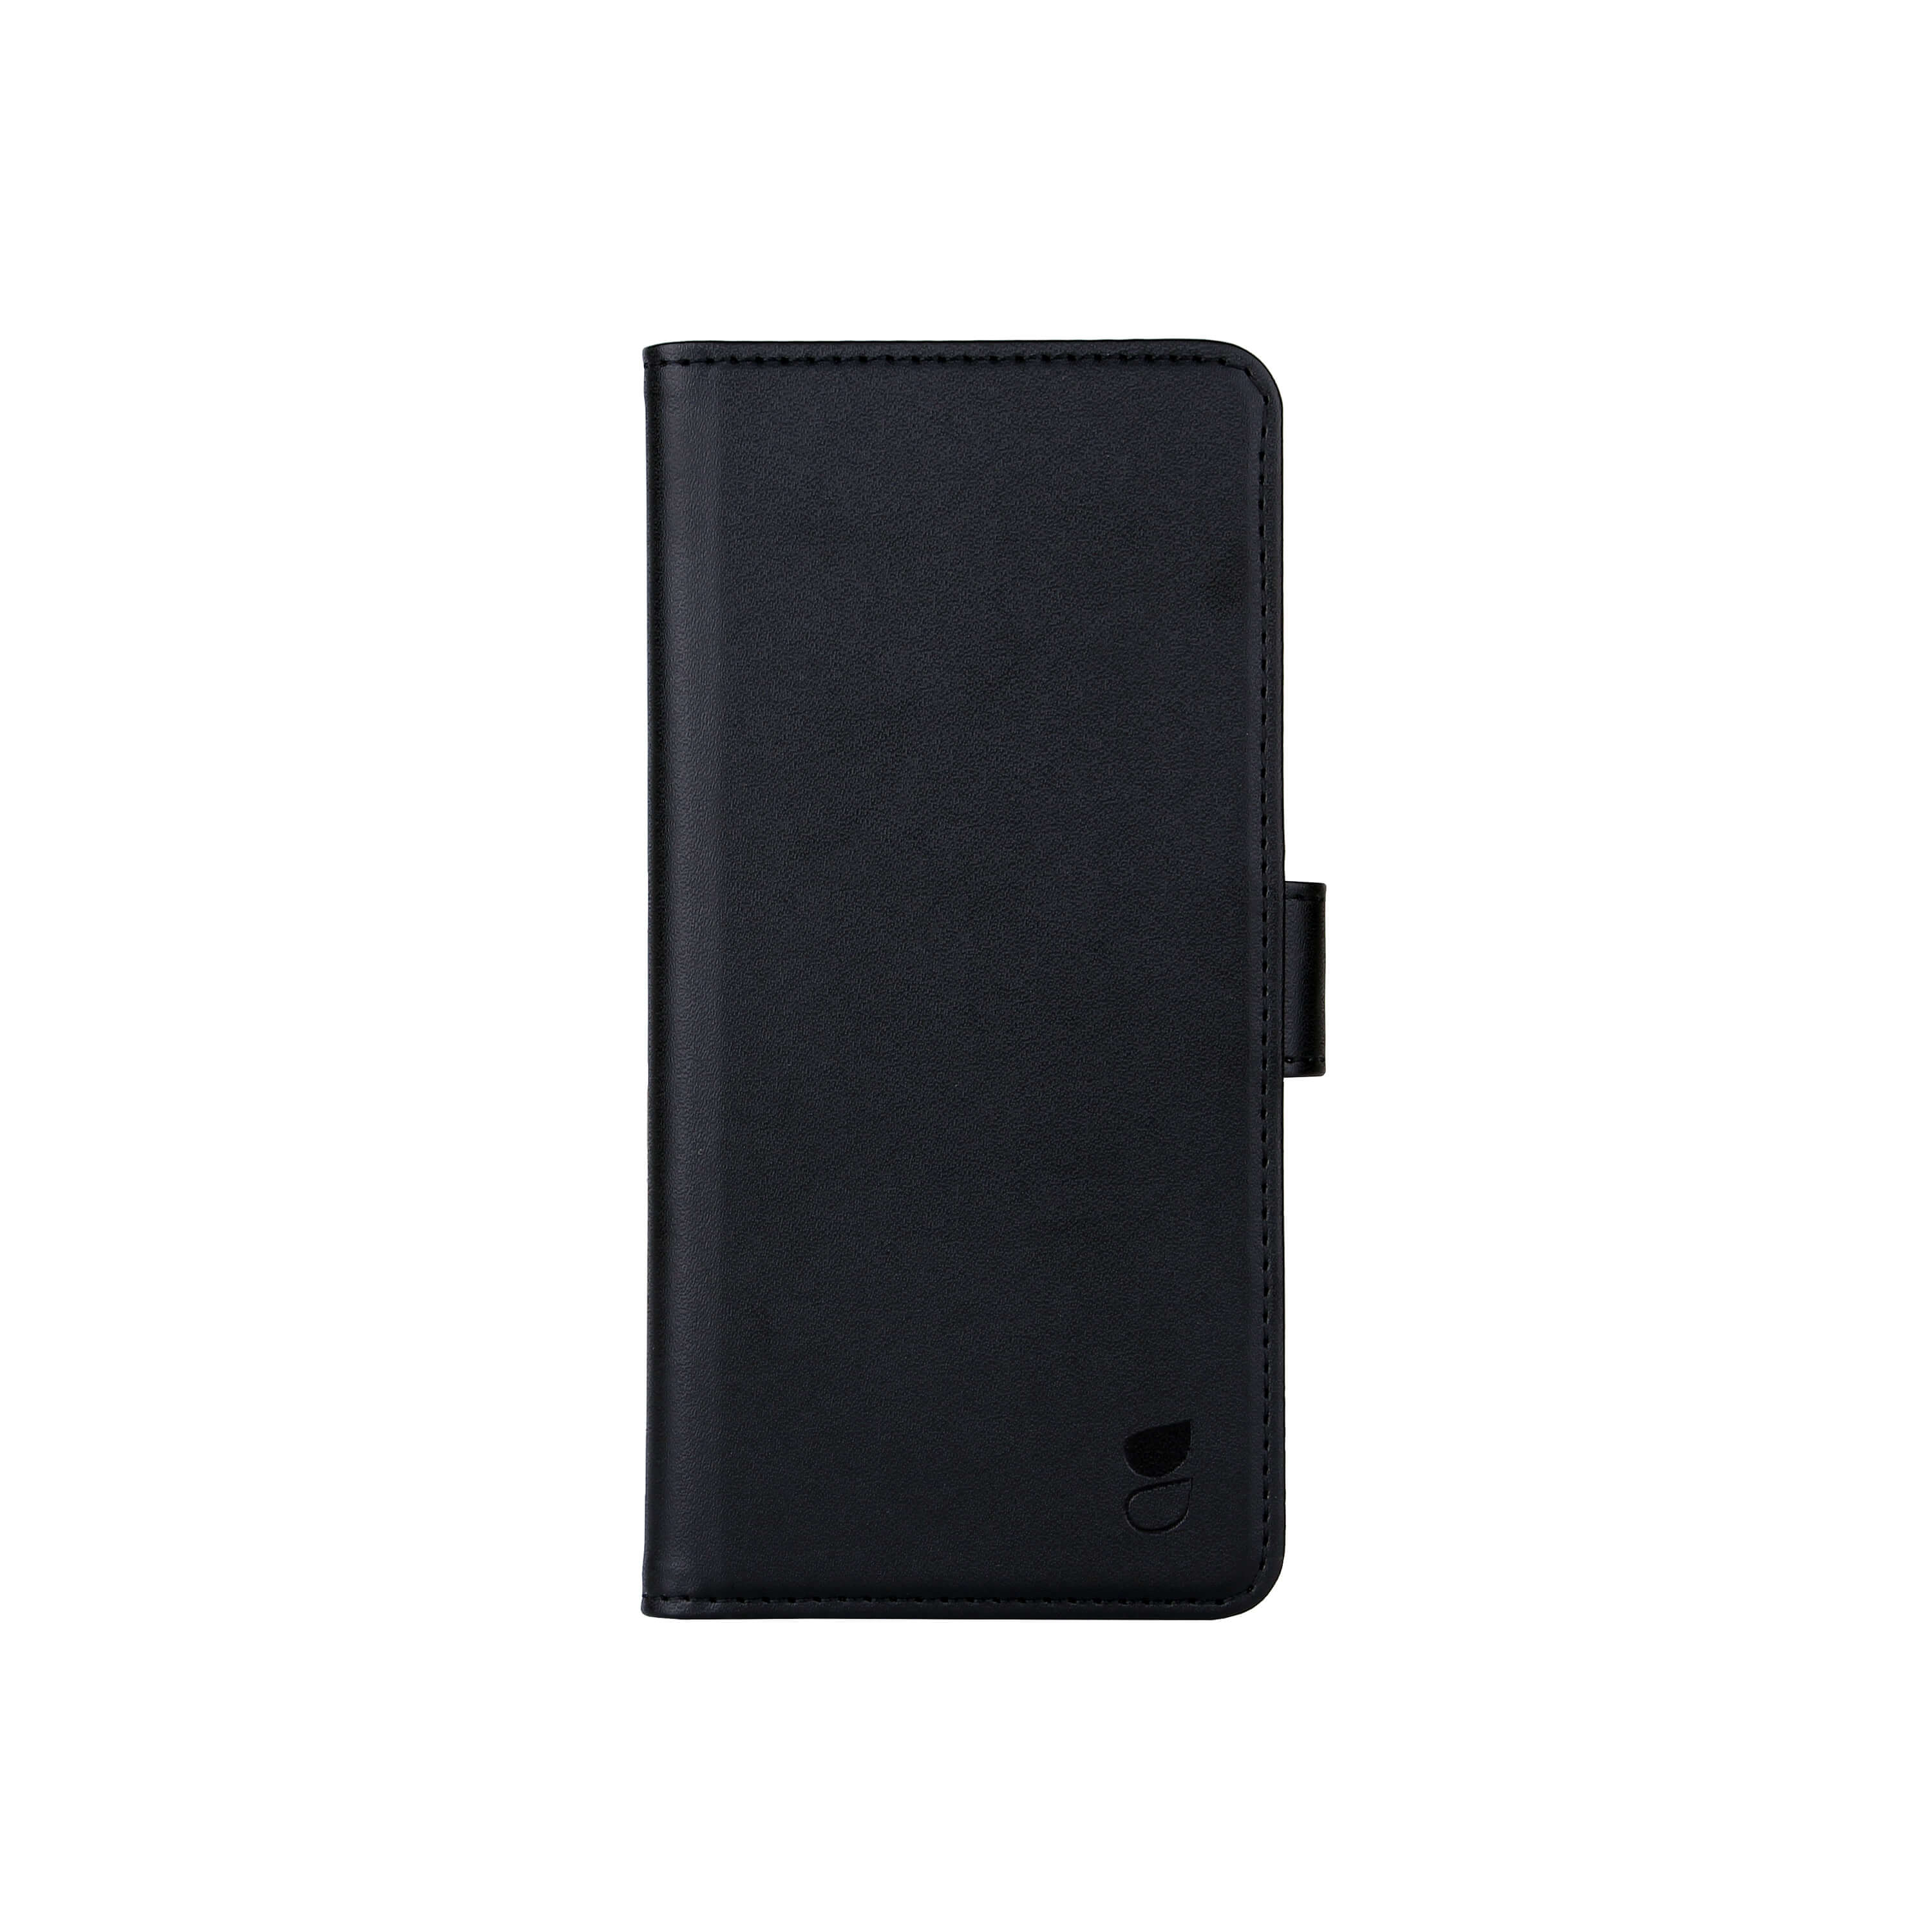 Wallet Black - Samsung A10 2019 